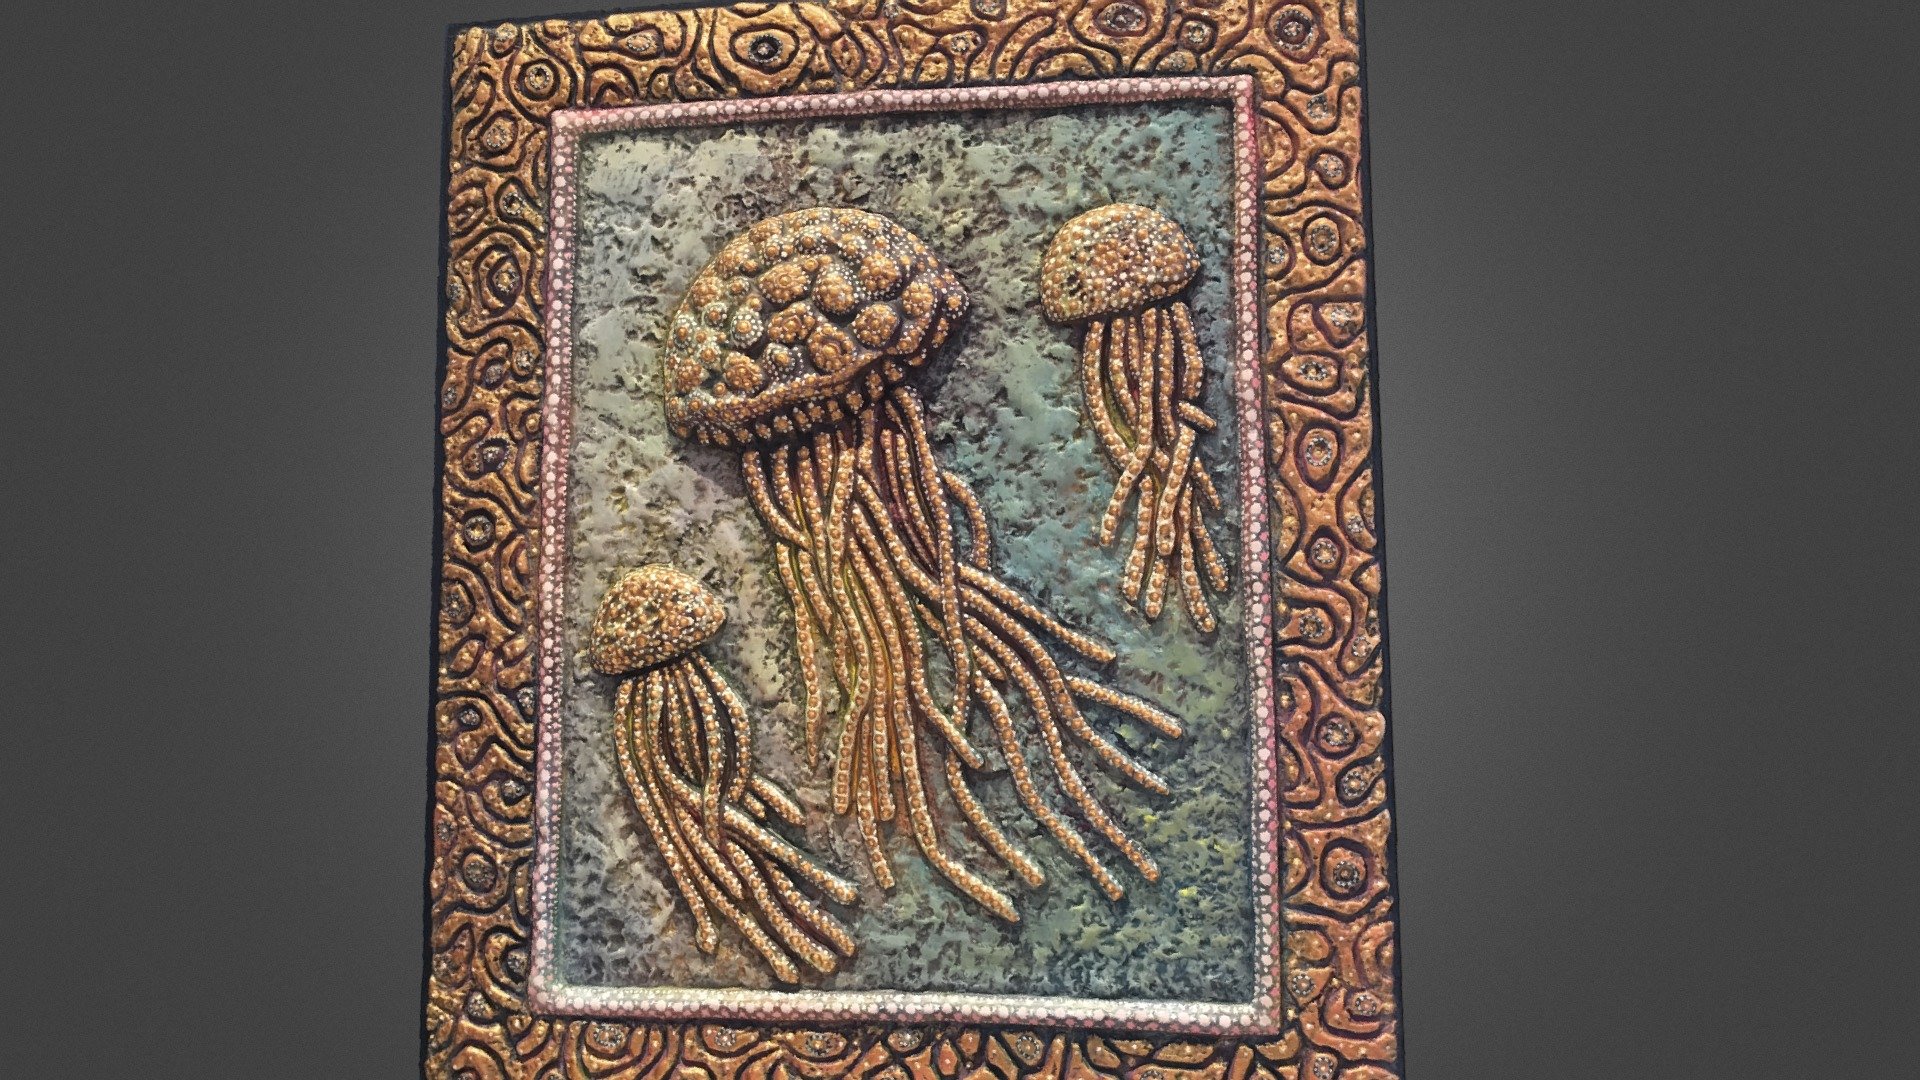 Bobtail squid painting - Split, Croatia